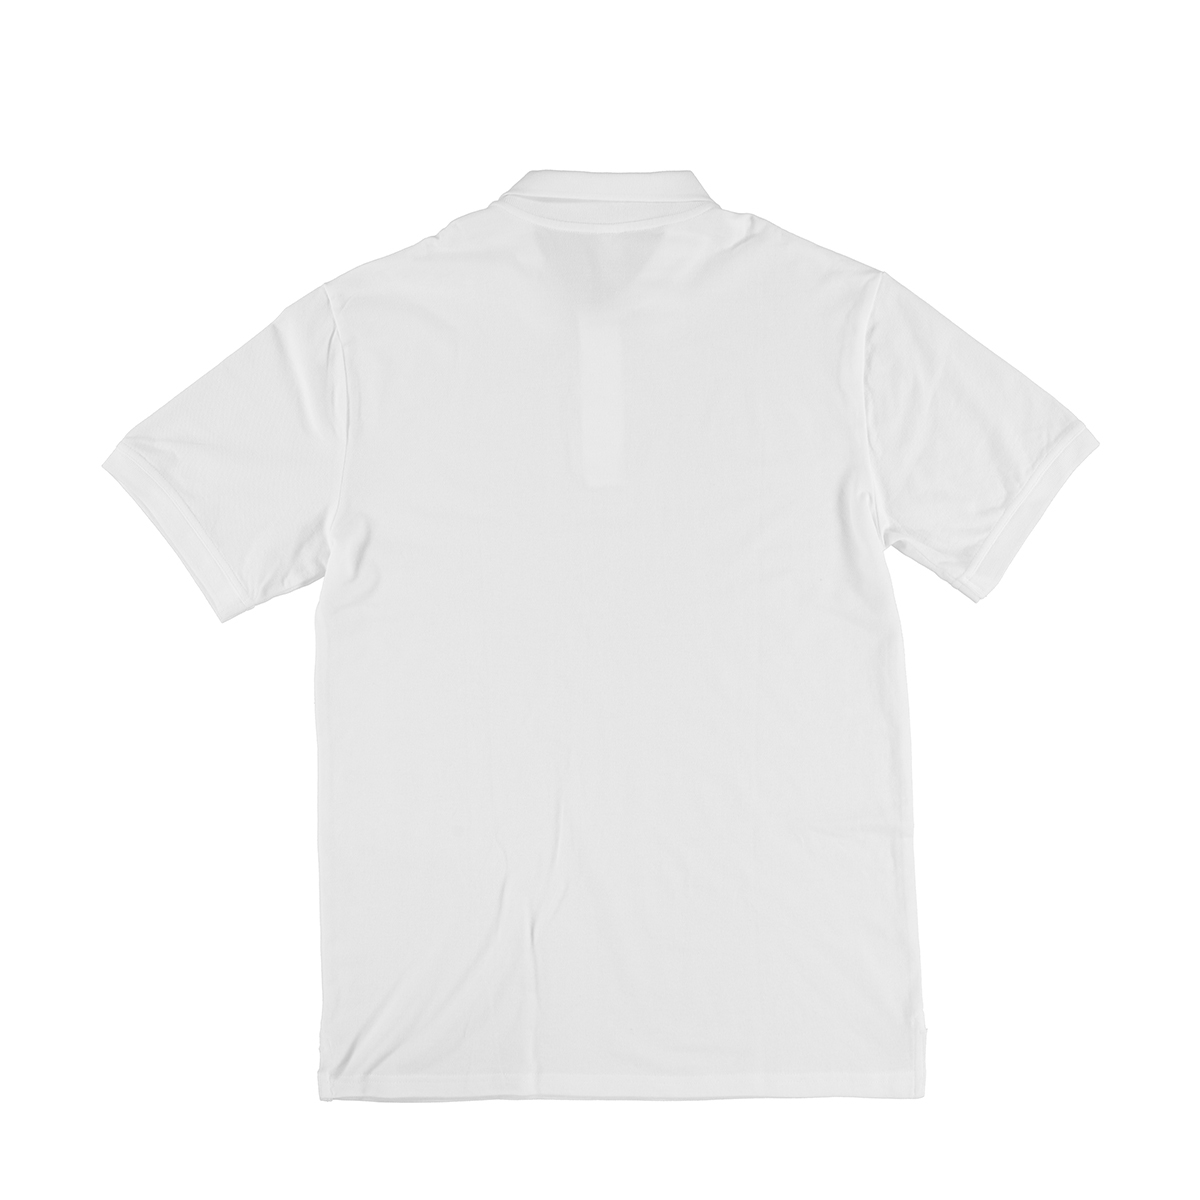 white polo shirt womens kmart